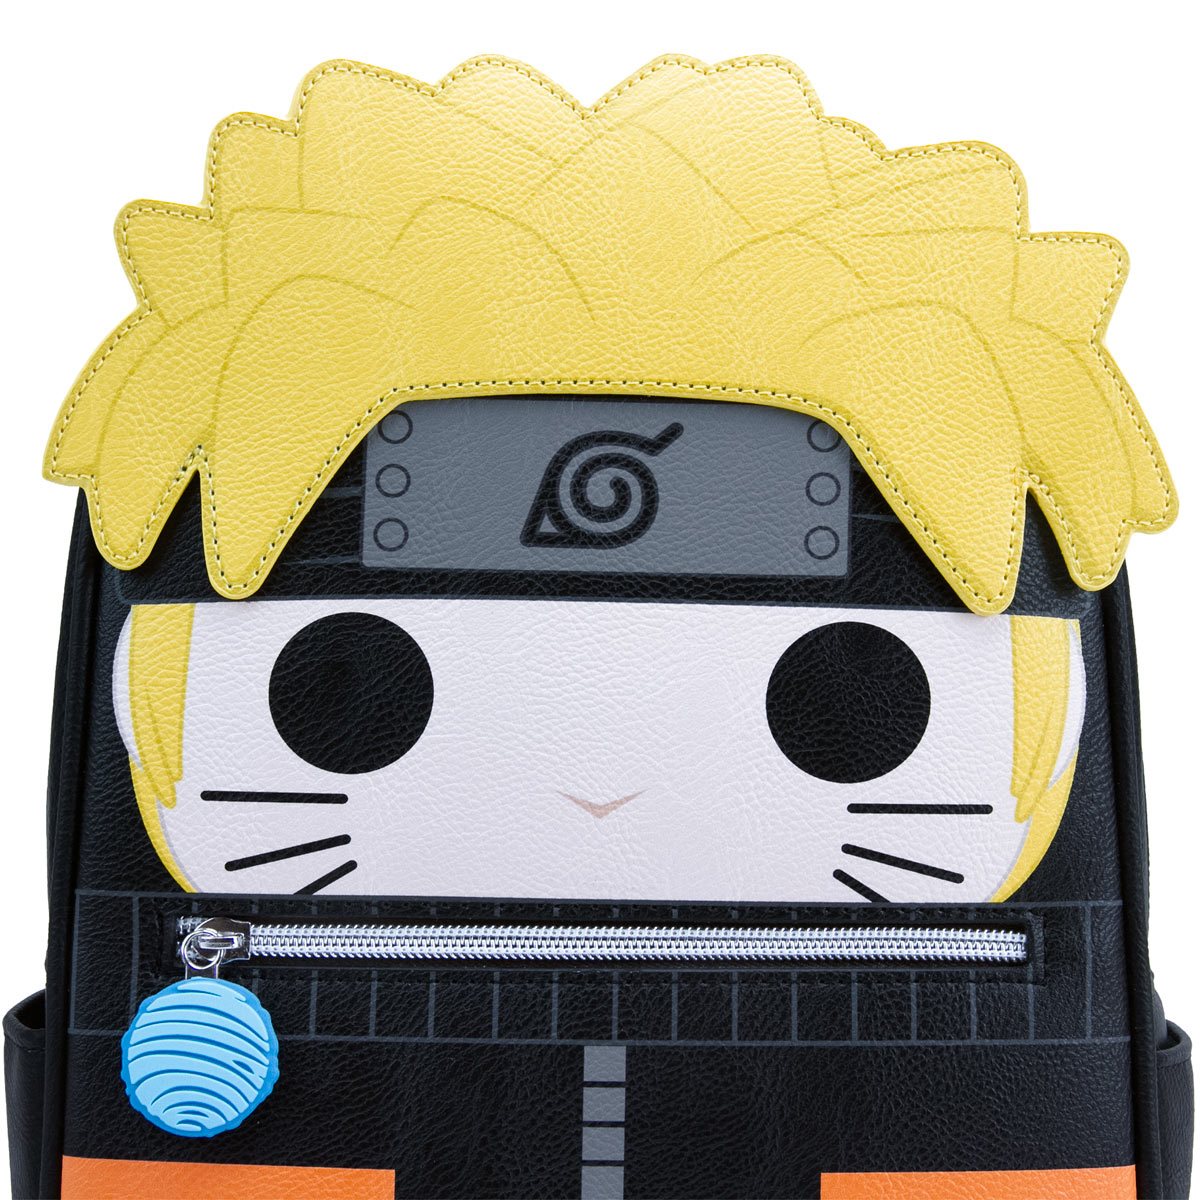 Naruto Backpack 5-Piece Set - Entertainment Earth